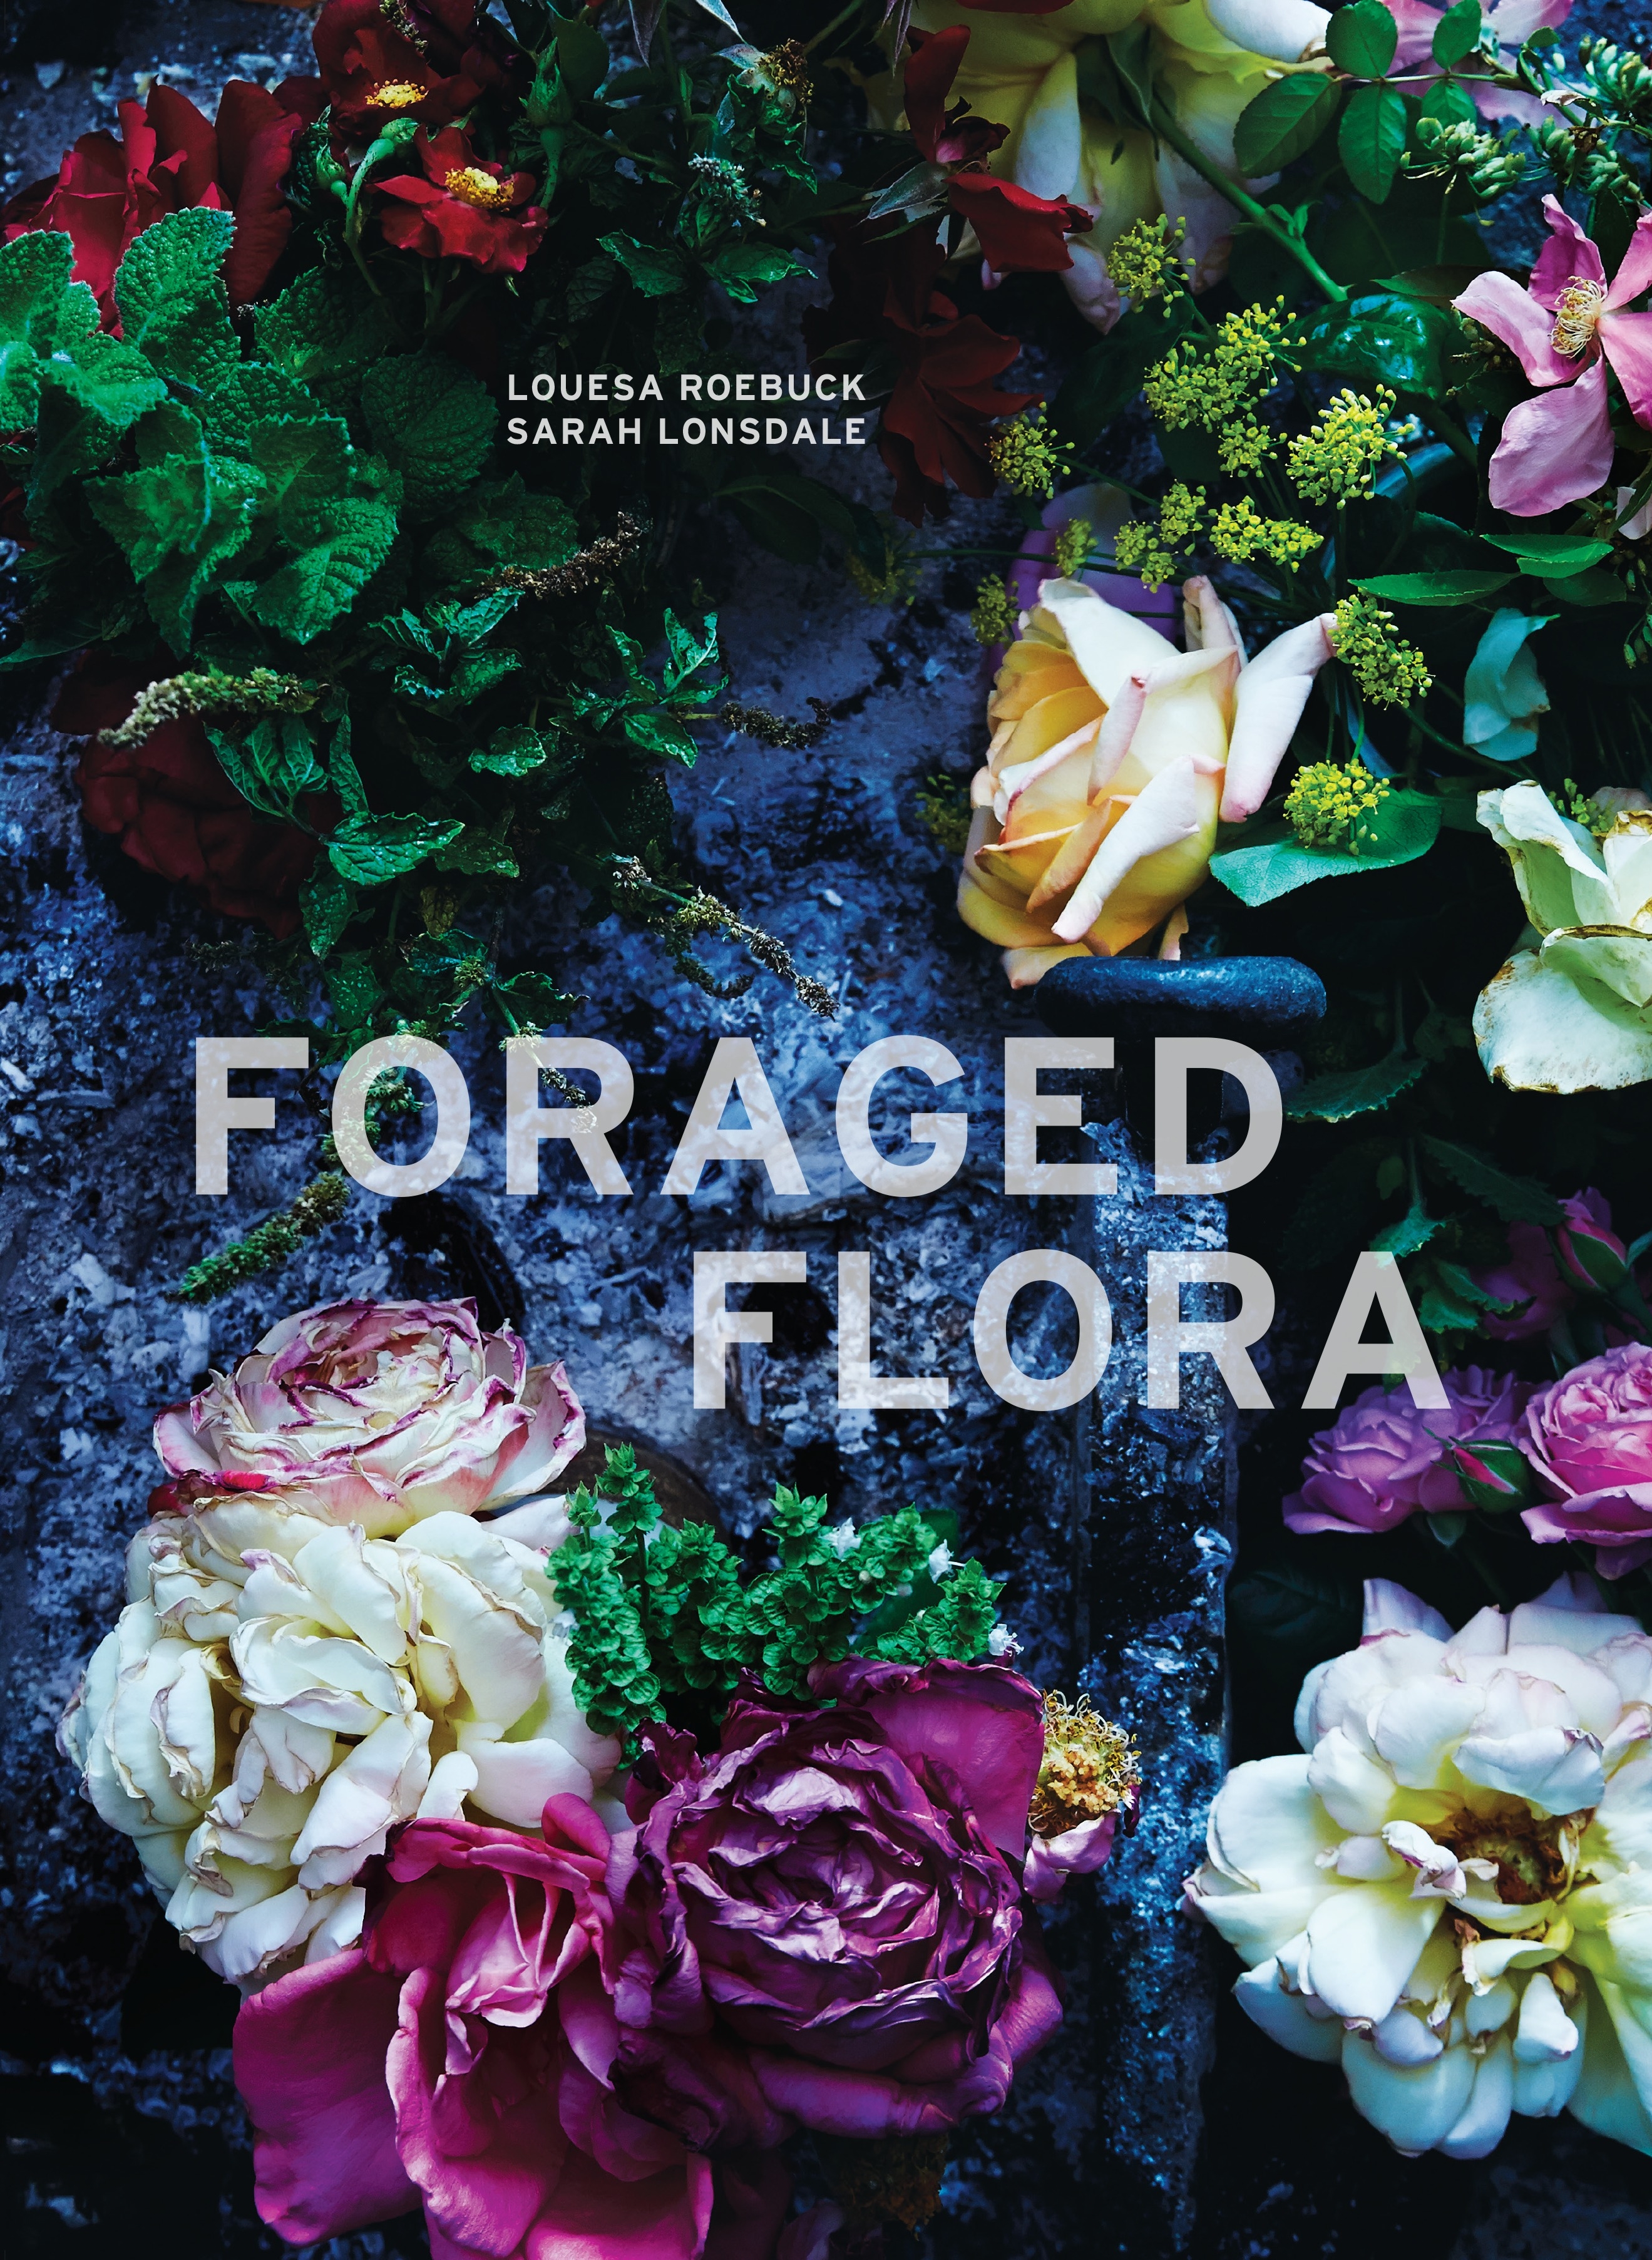 foraged flora by louesa roebuck - penguin books australia